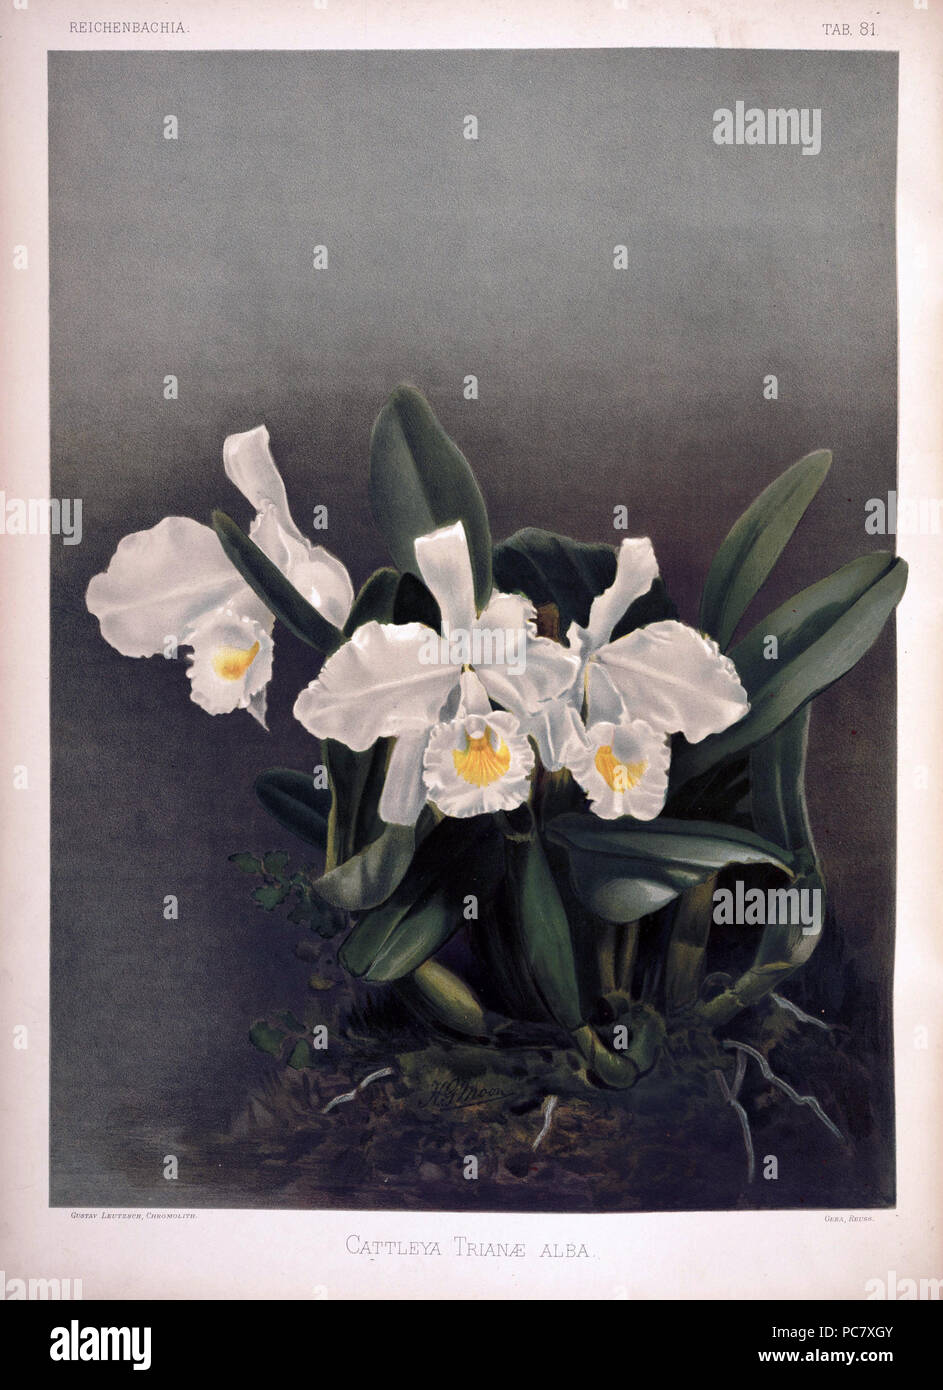 220 Frederick Sander - Reichenbachia II plate 81 (1890) - Cattleya trianae alba Stock Photo